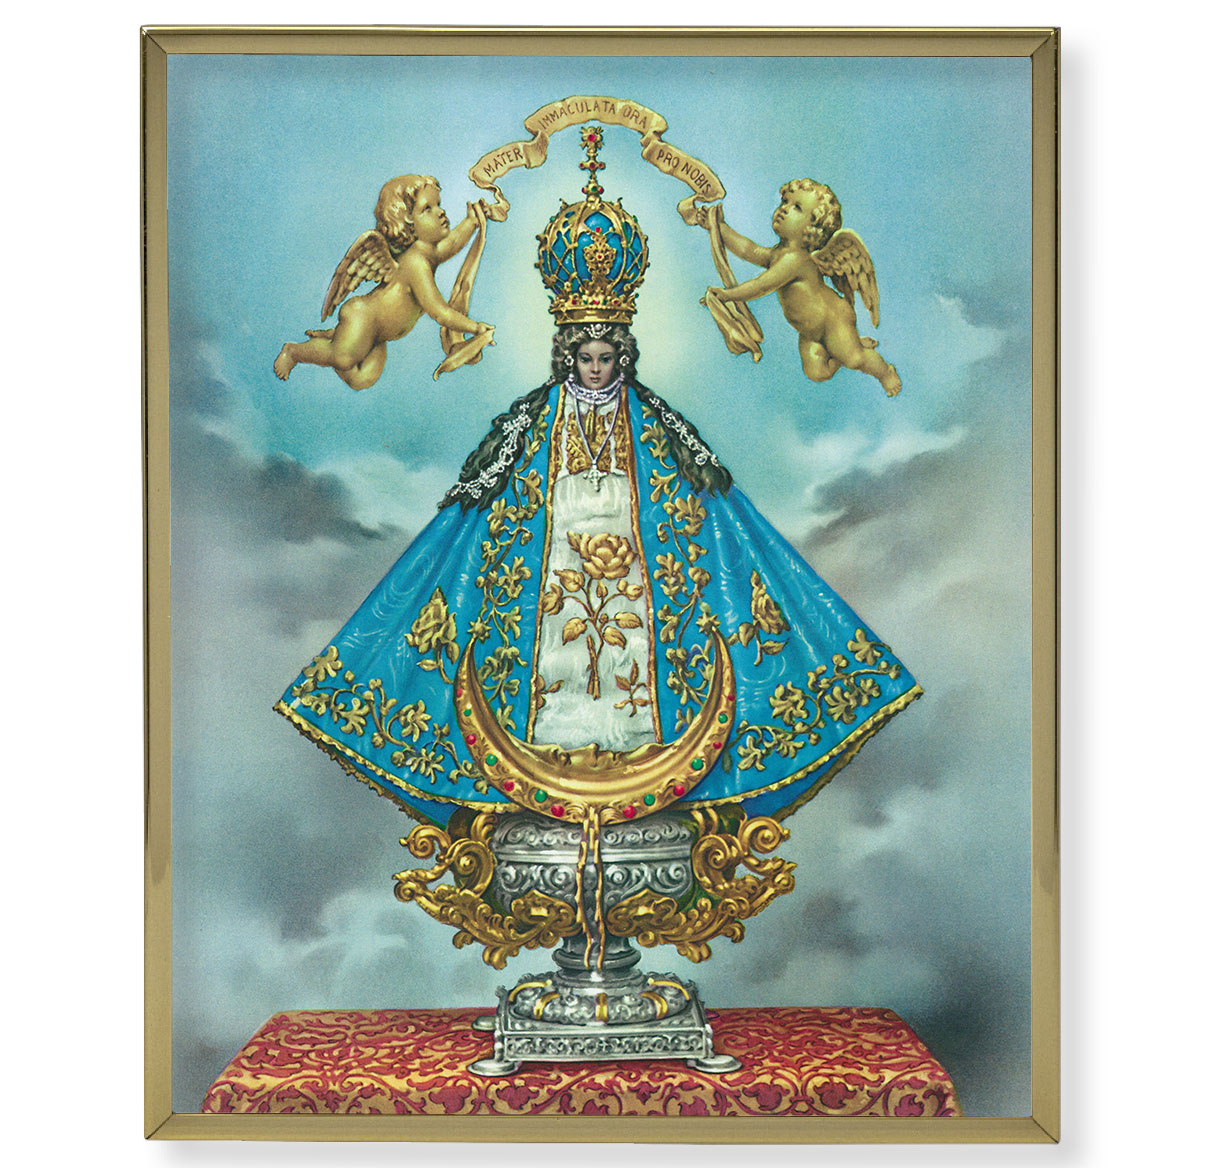 Virgen de San Juan Picture Framed Plaque Wall Art Decor Medium, Bright Gold Finished Trimmed Plaque